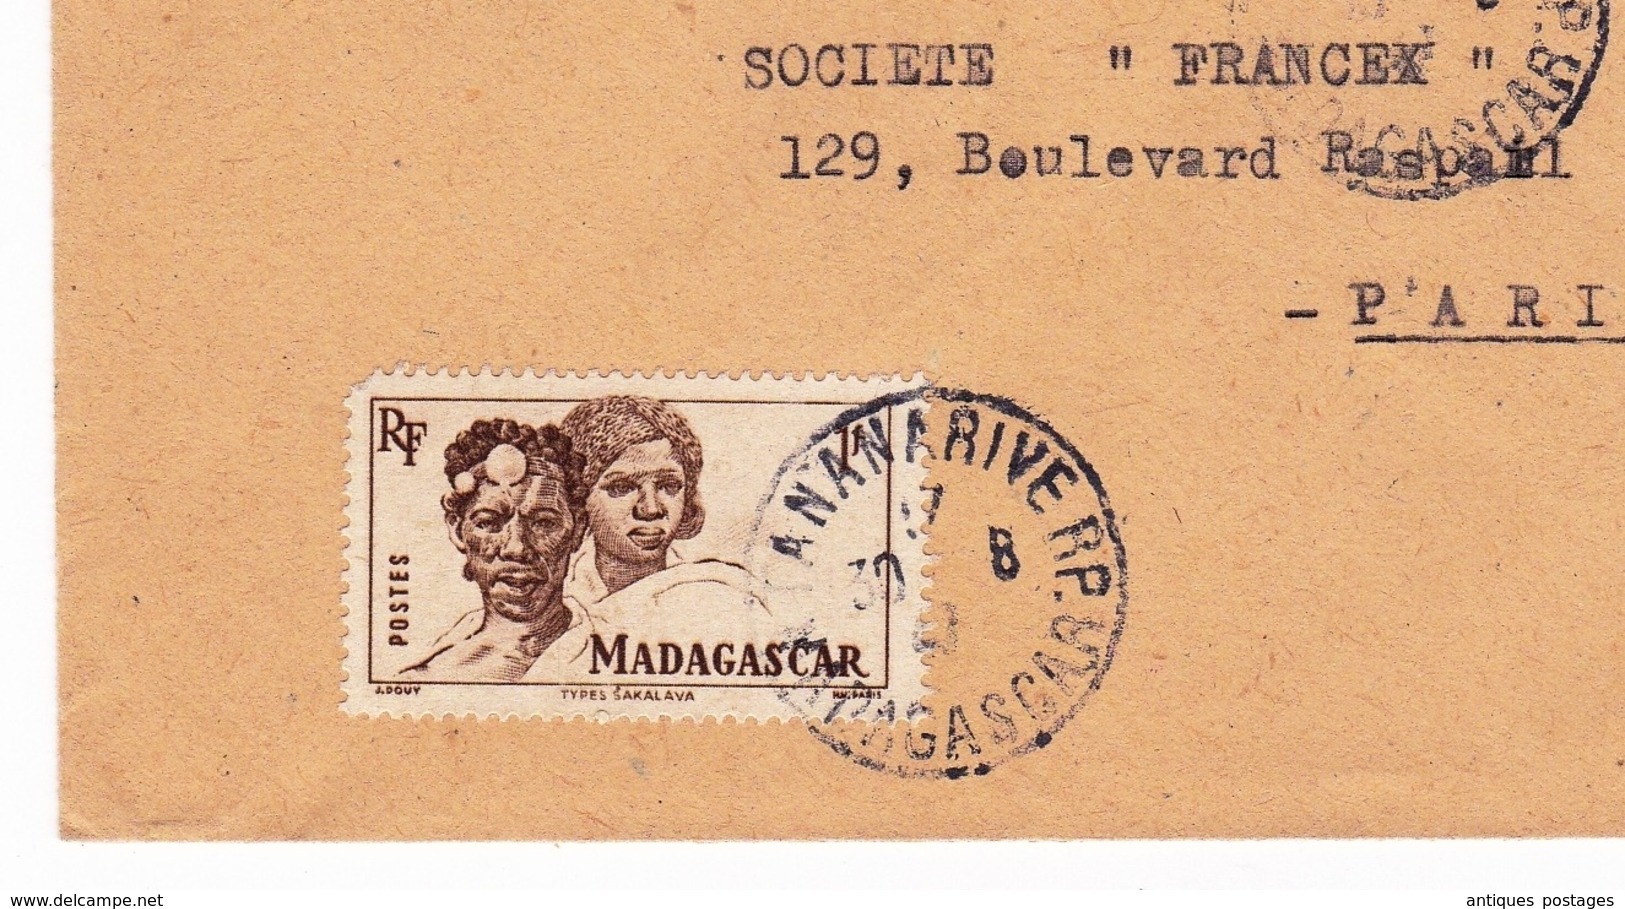 Lettre 1947 Madagascar Poste Aérienne Antananarivo Tananarive Crédit Foncier Banque Bank - Airmail